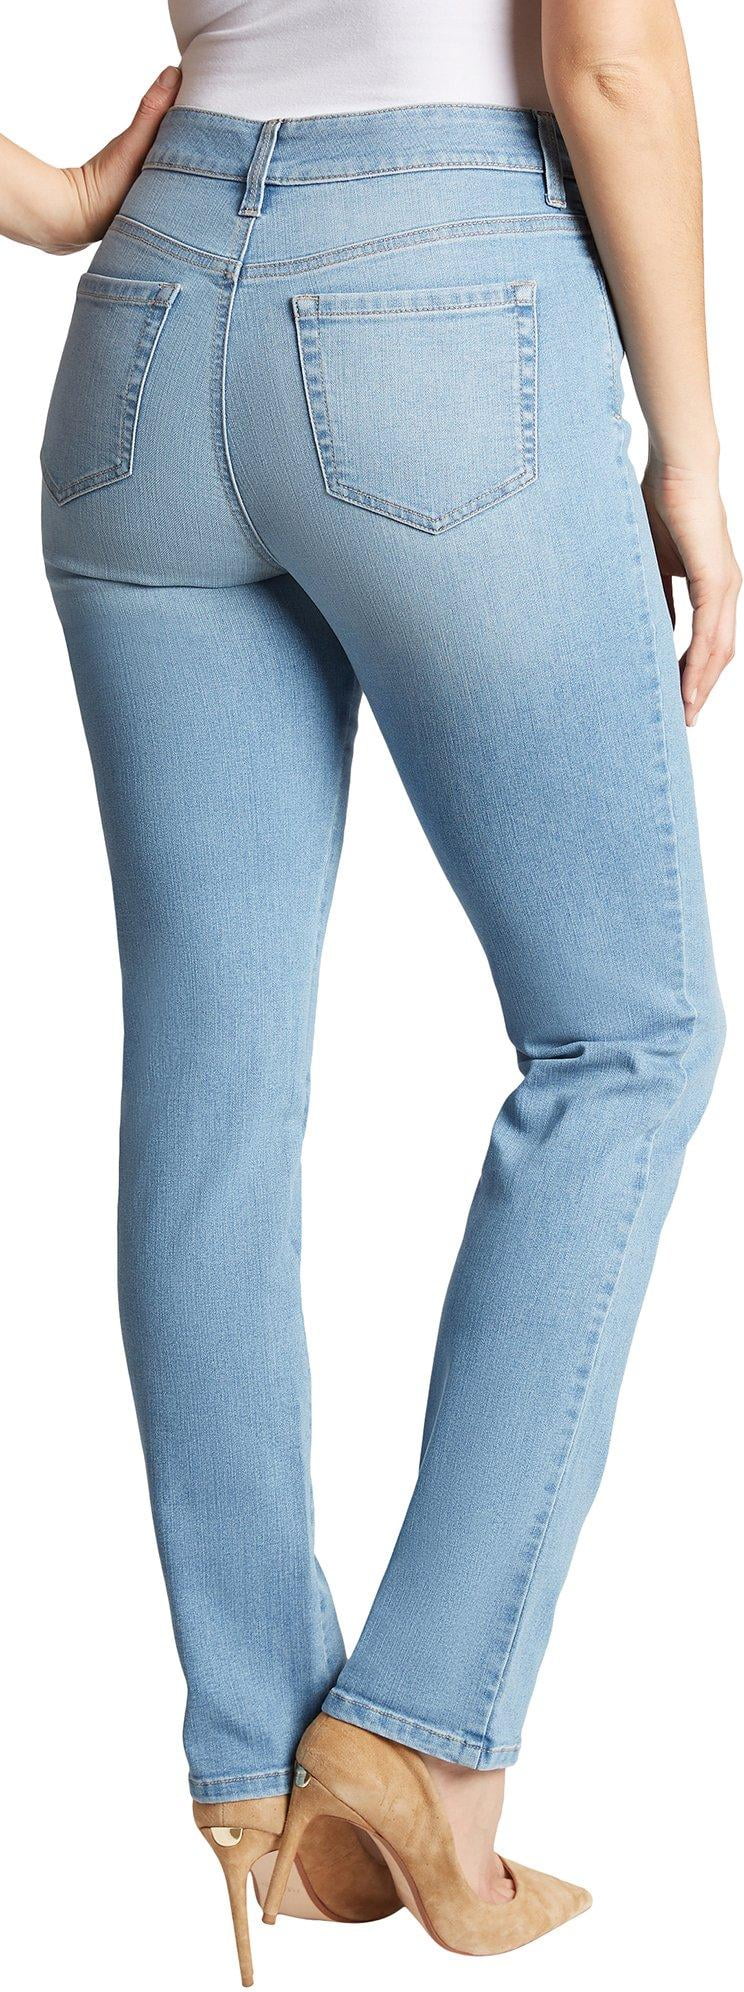 gloria vanderbilt petite amanda stretch jeans